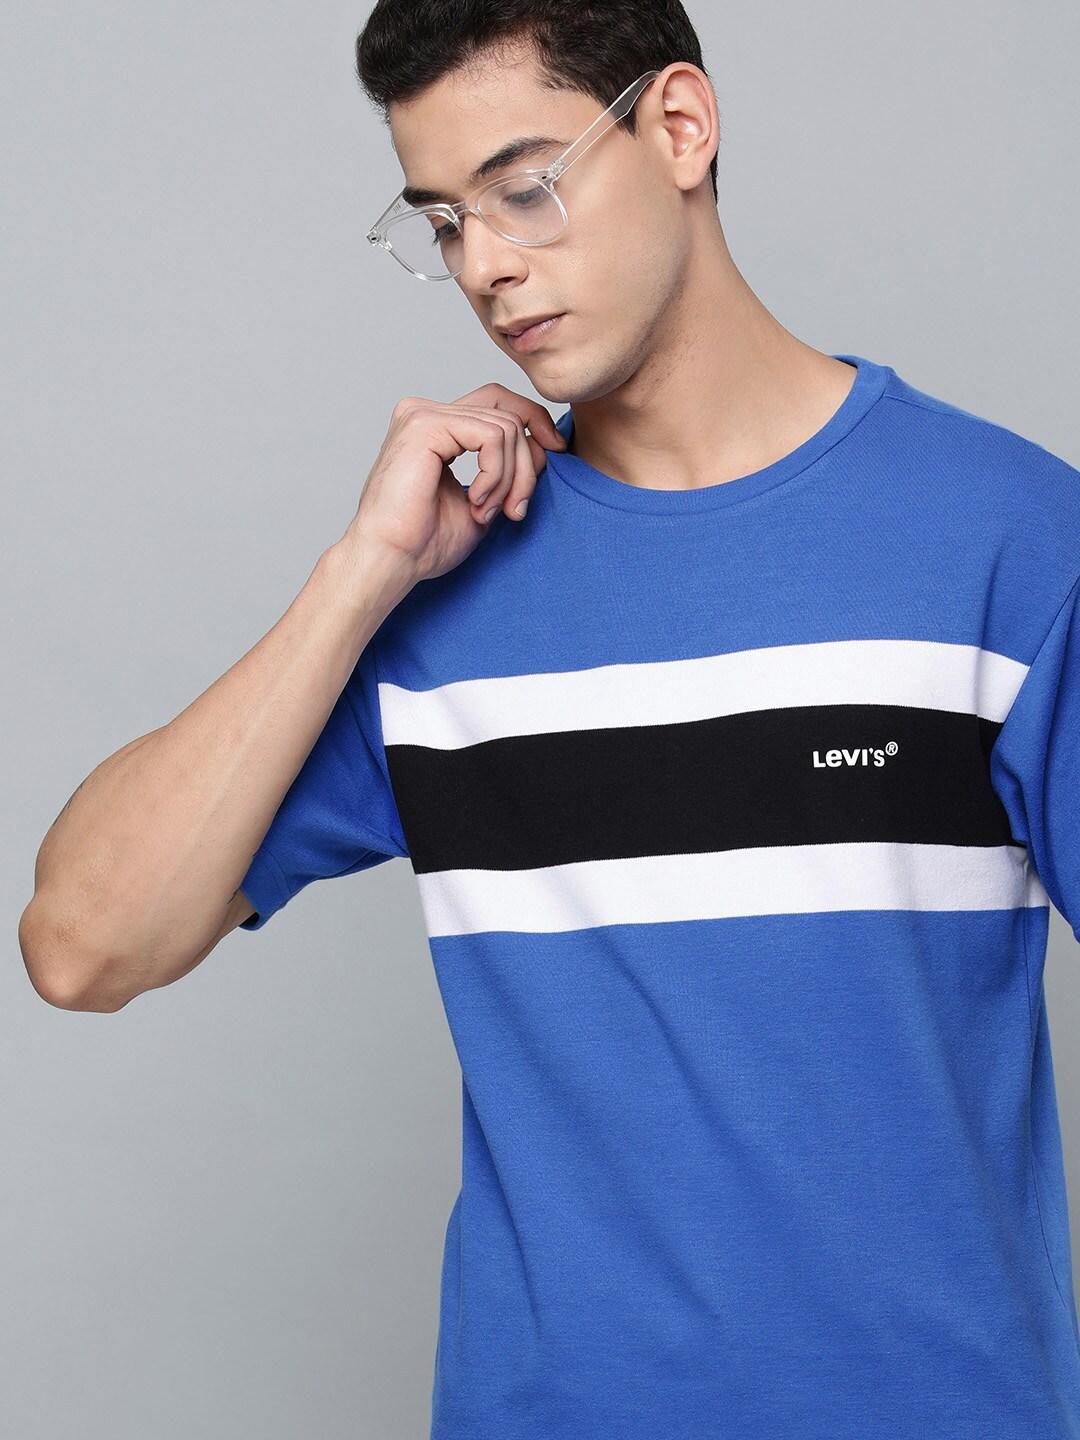 levis-men-blue-&-black-colourblocked-t-shirt